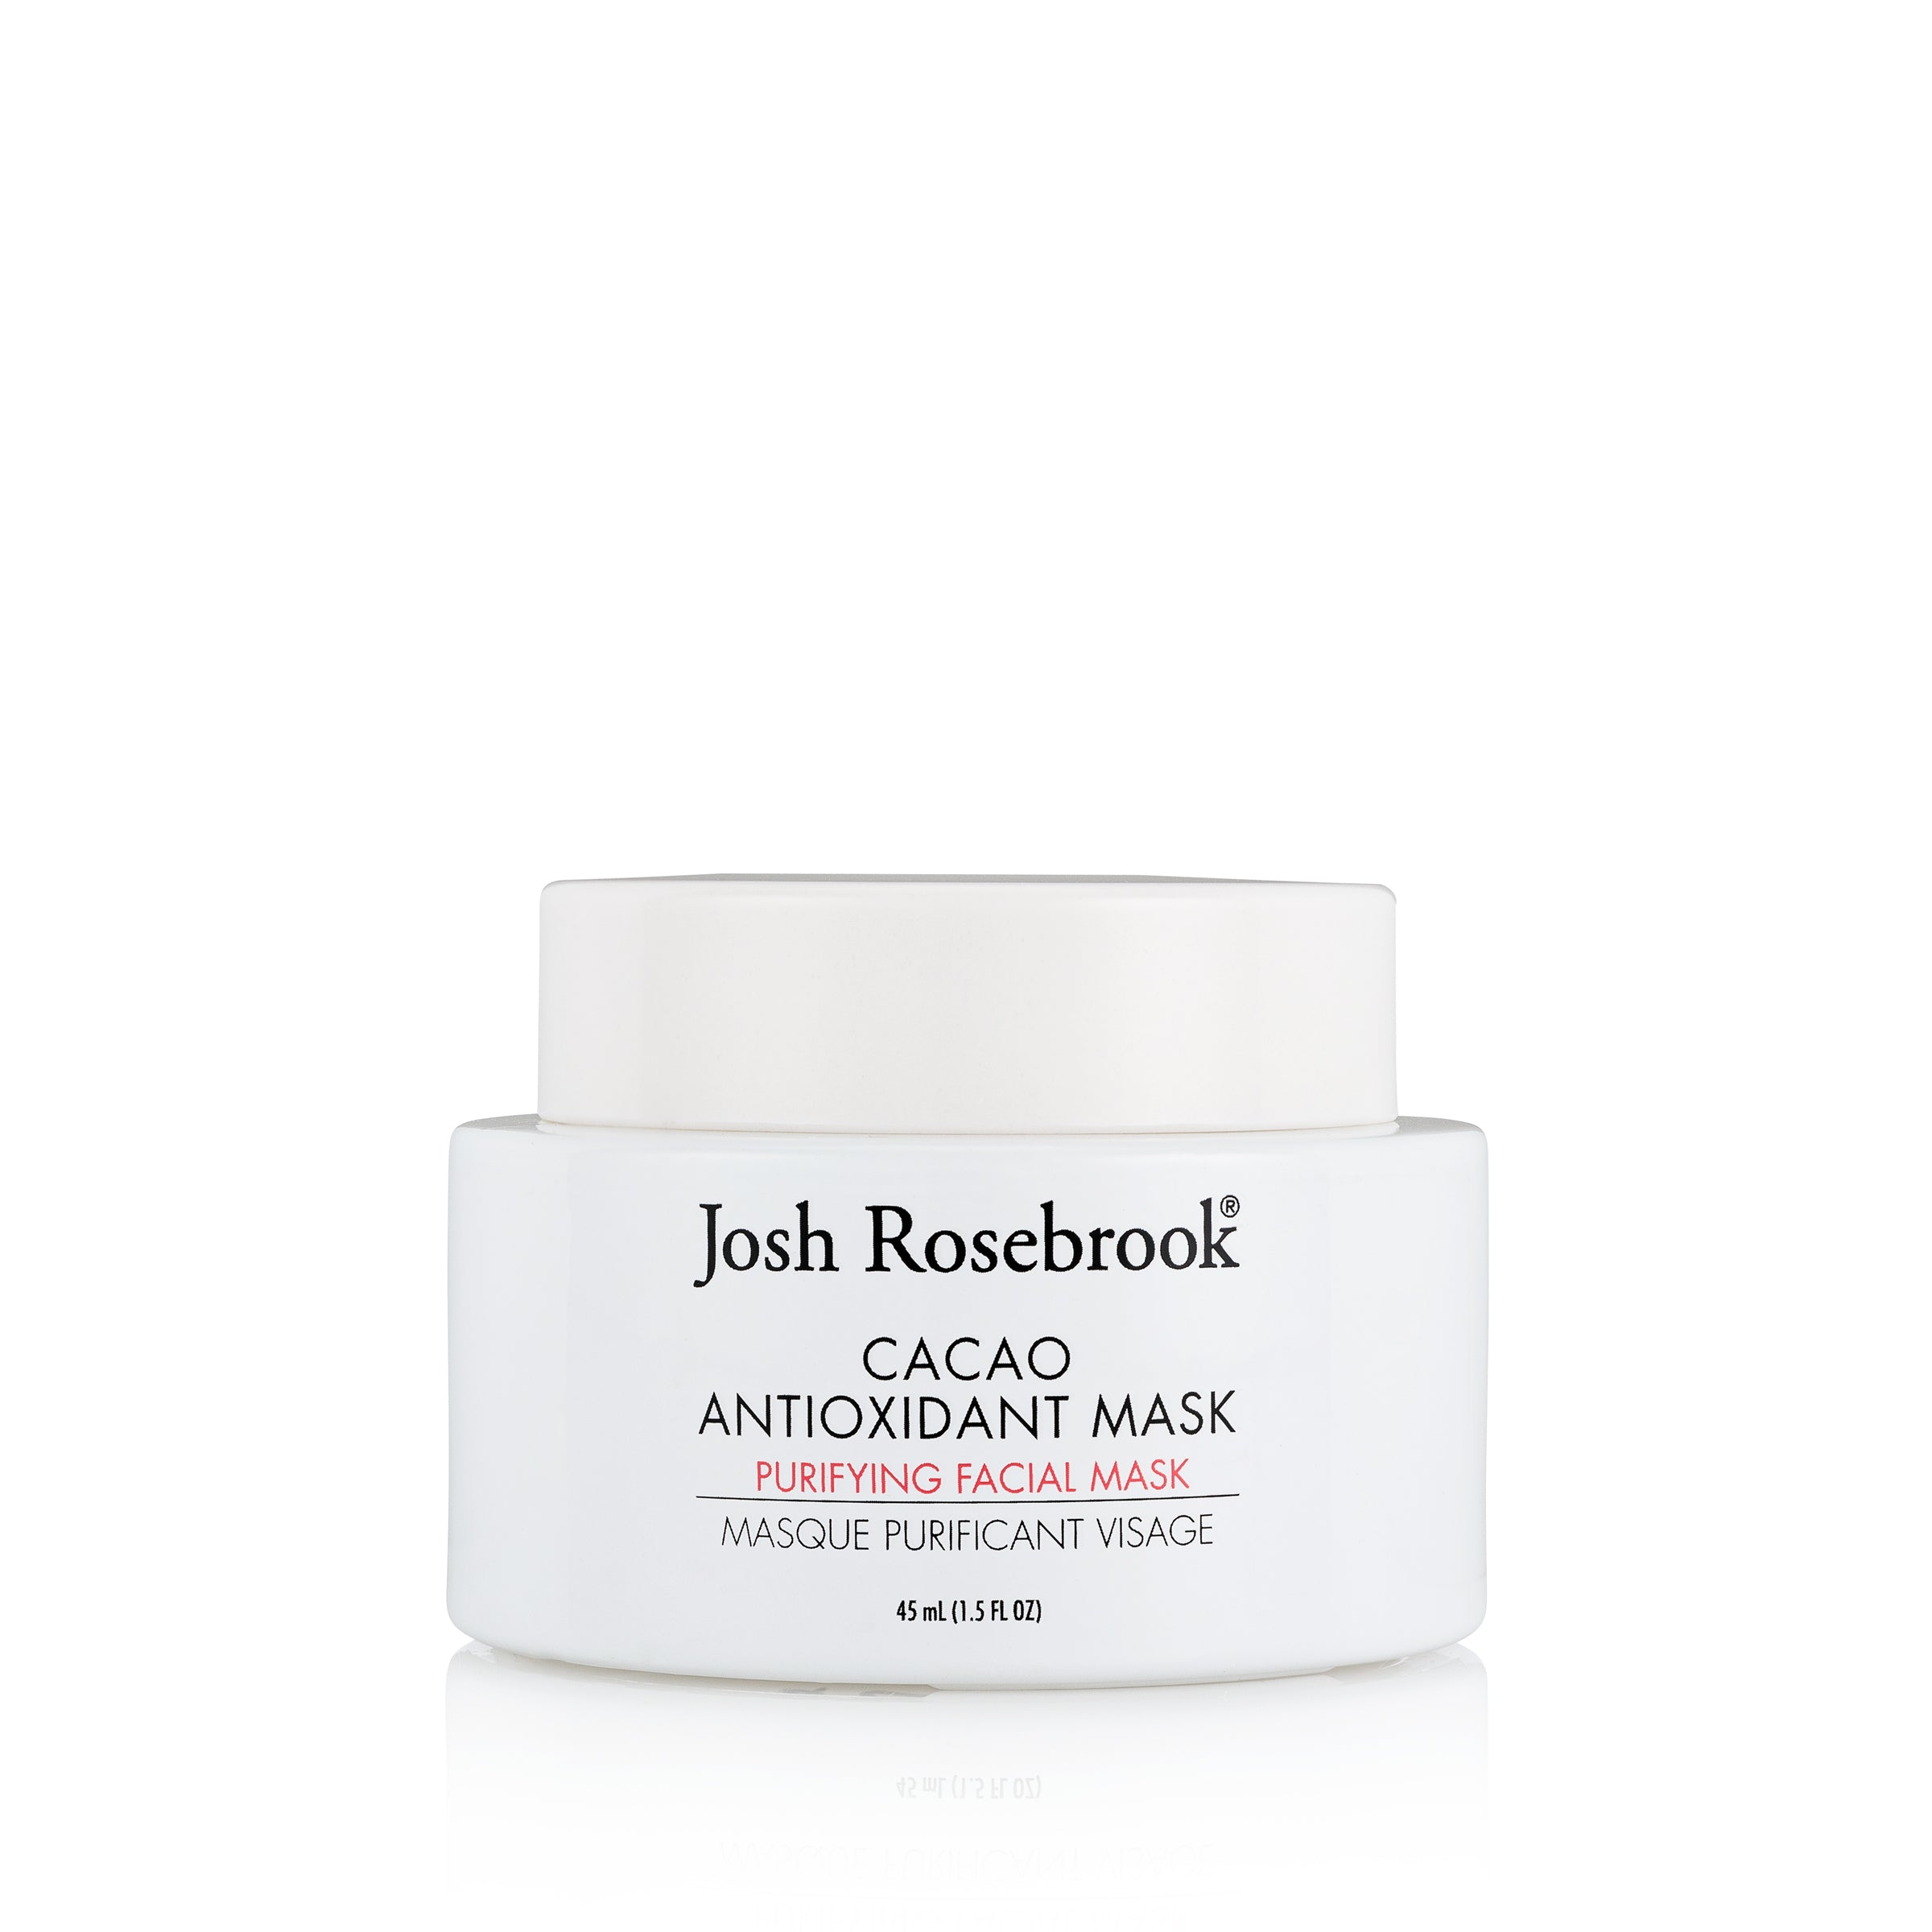 Josh Rosebrook Cacao Antioxidant Mask Large 1.5oz - AILLEA